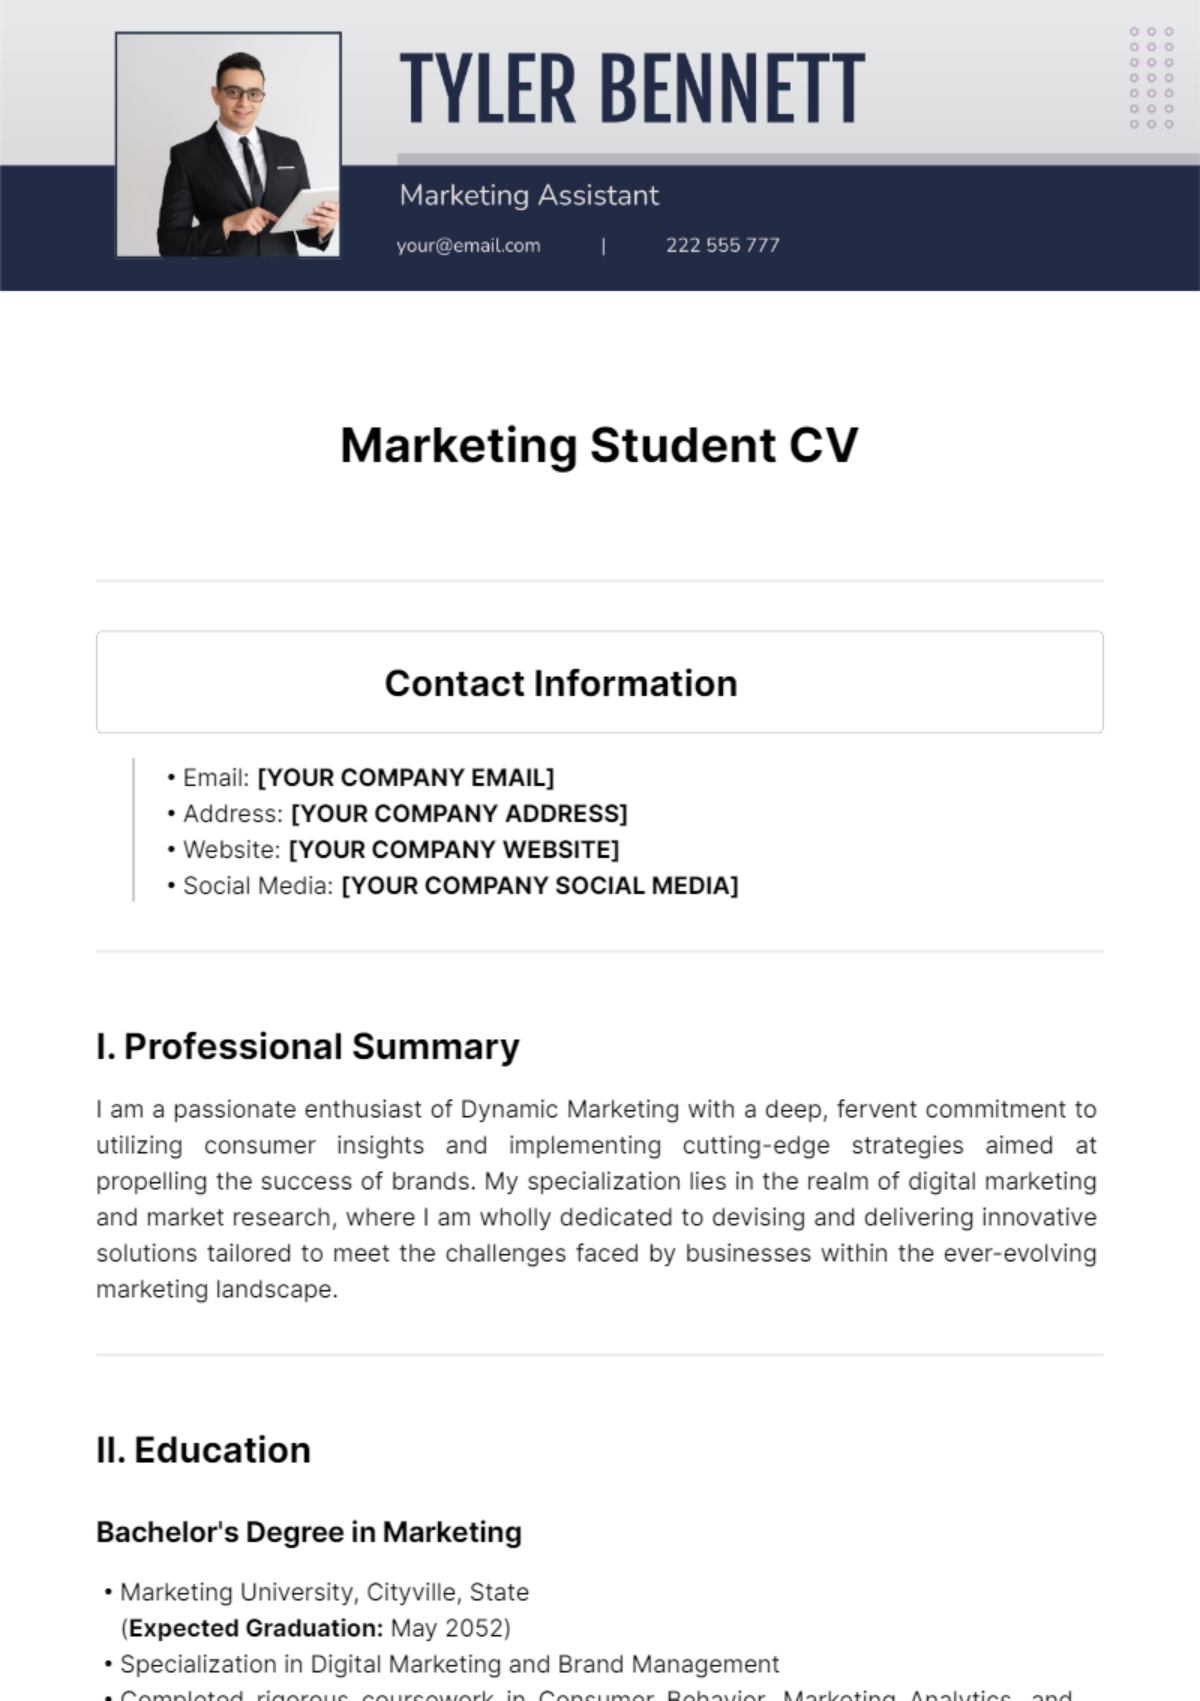 Marketing Student CV Template